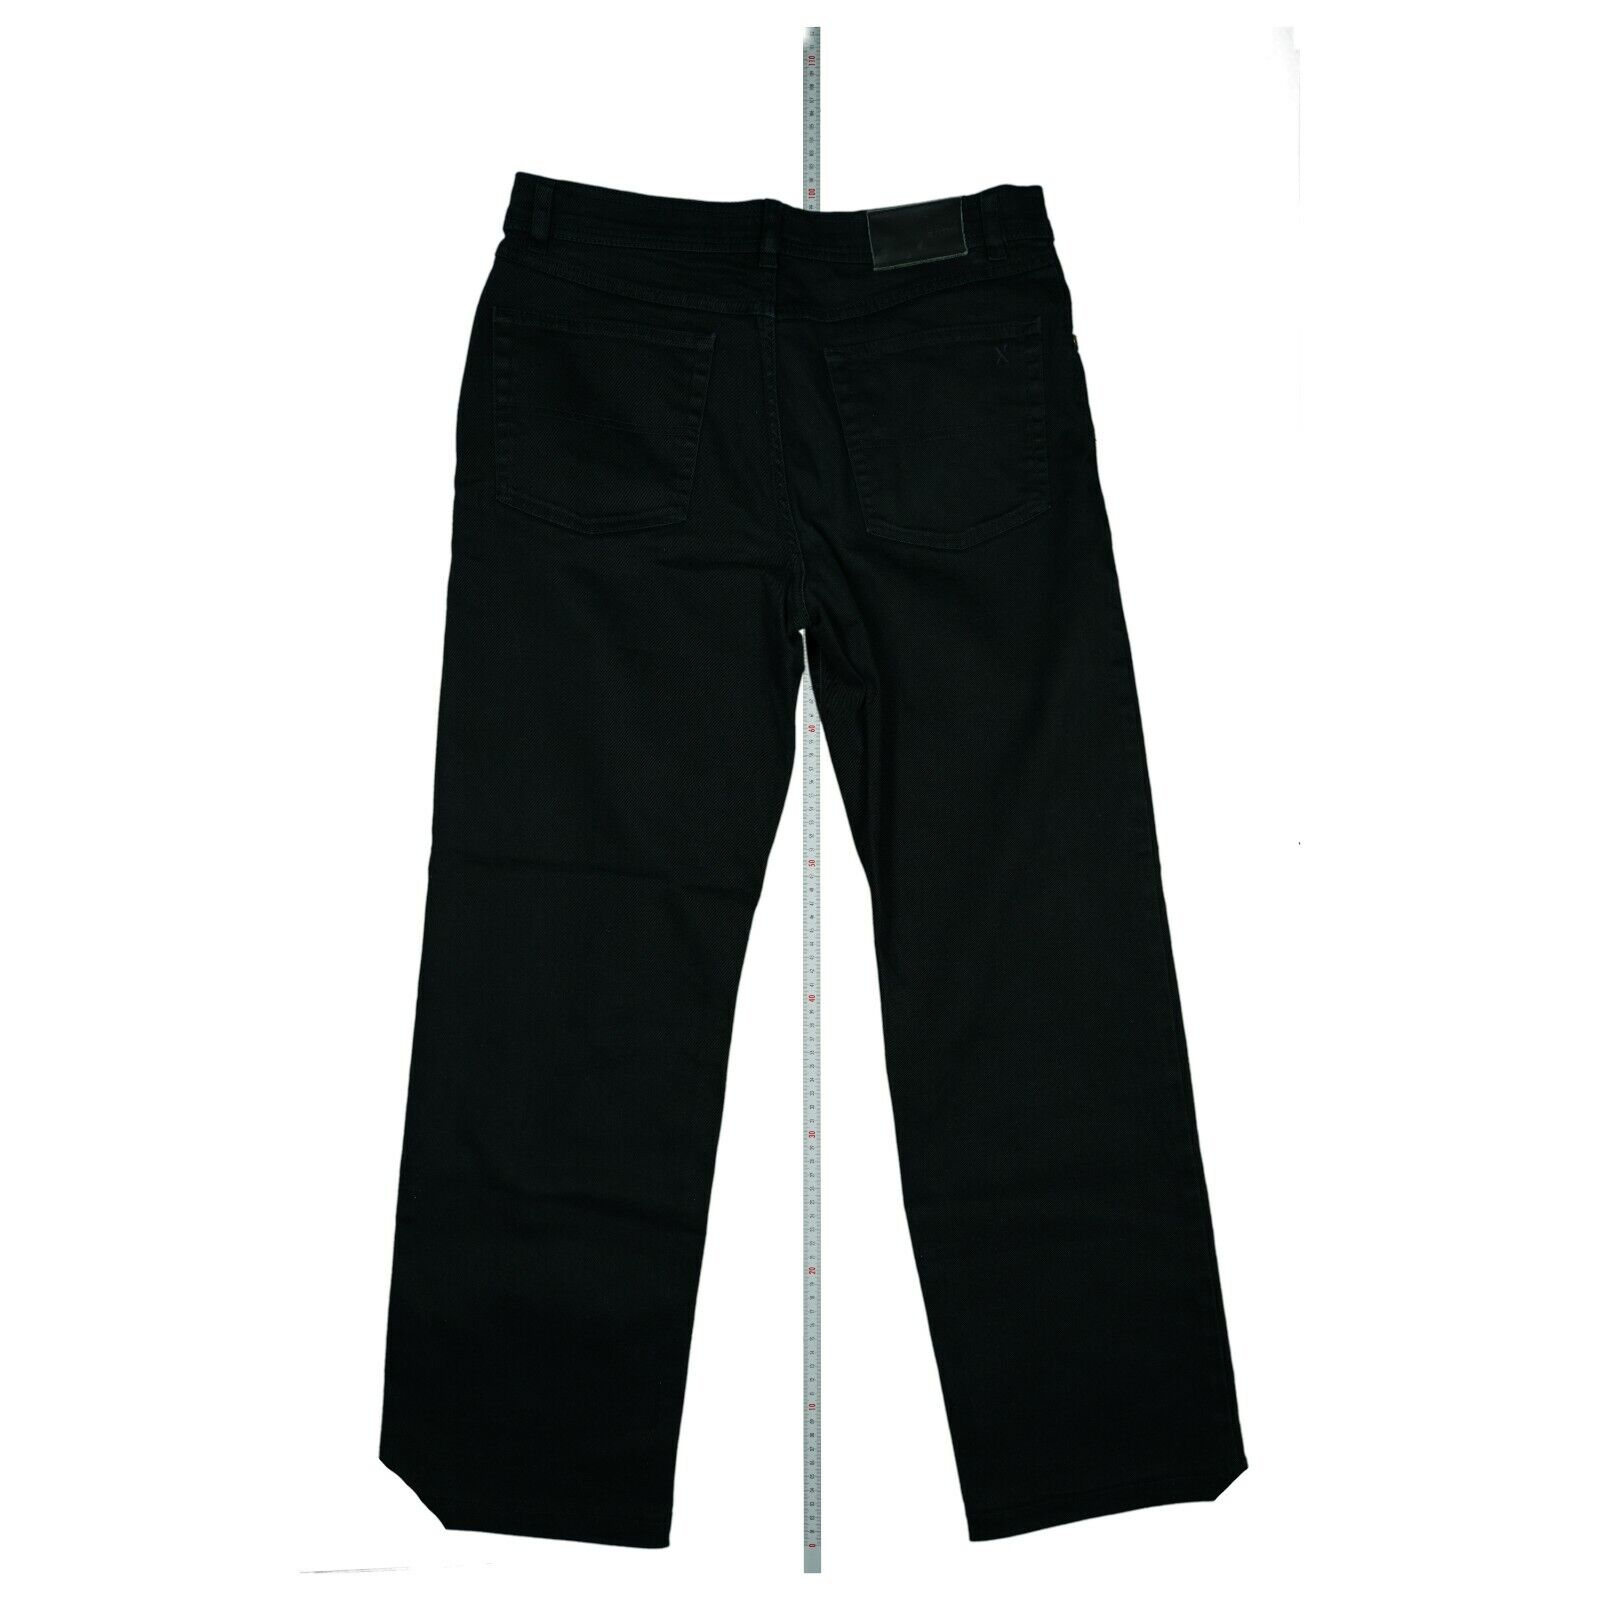 Perma Black By BRAX Carlos Men's Jeans Size 50 W34 L30 Black Top | eBay